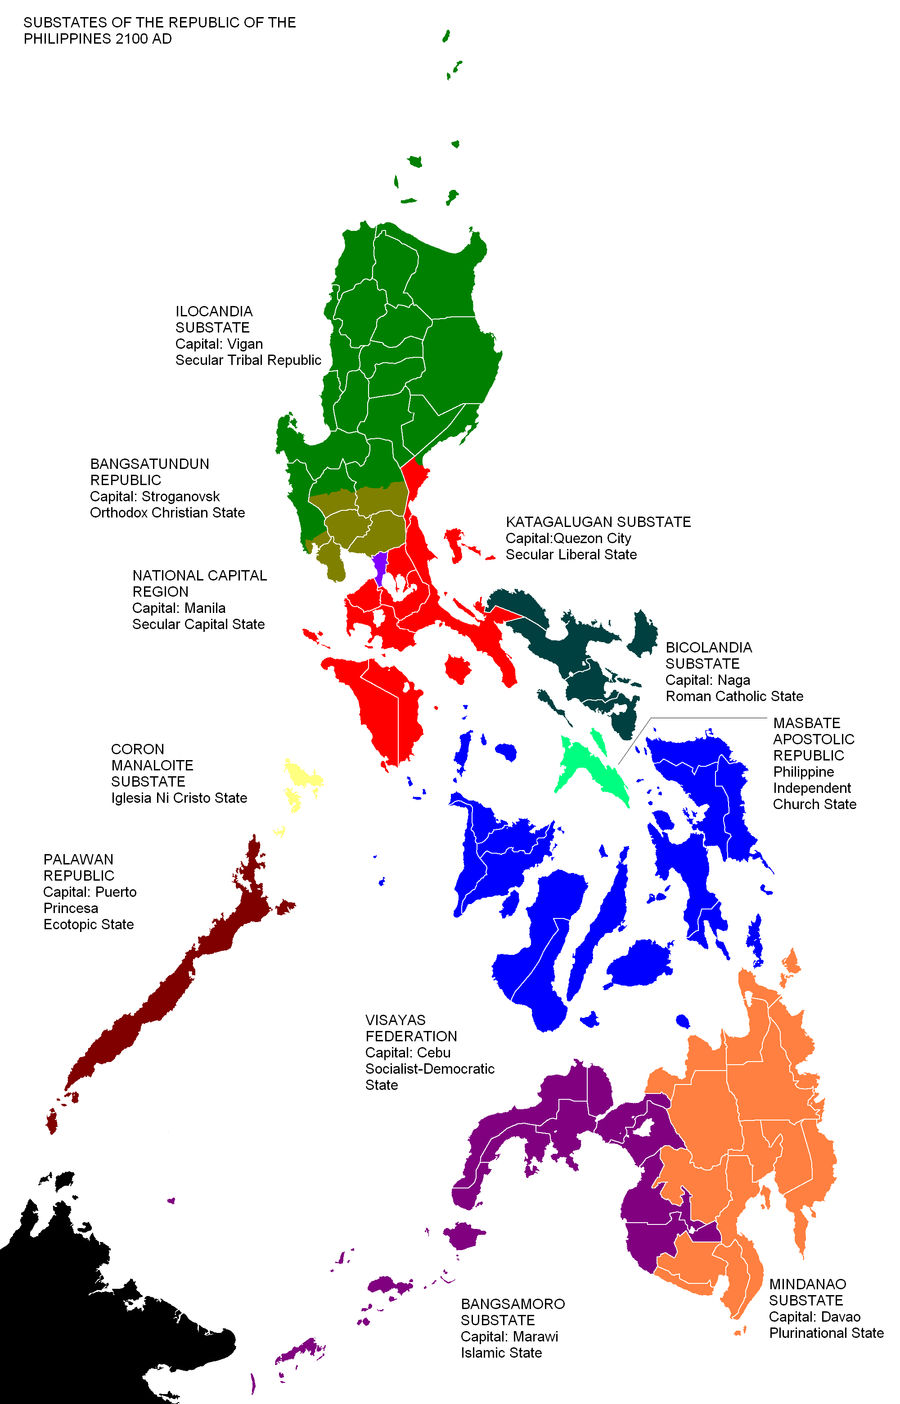 Philippine Substates 2100 AD by kyuzoaoi on DeviantArt